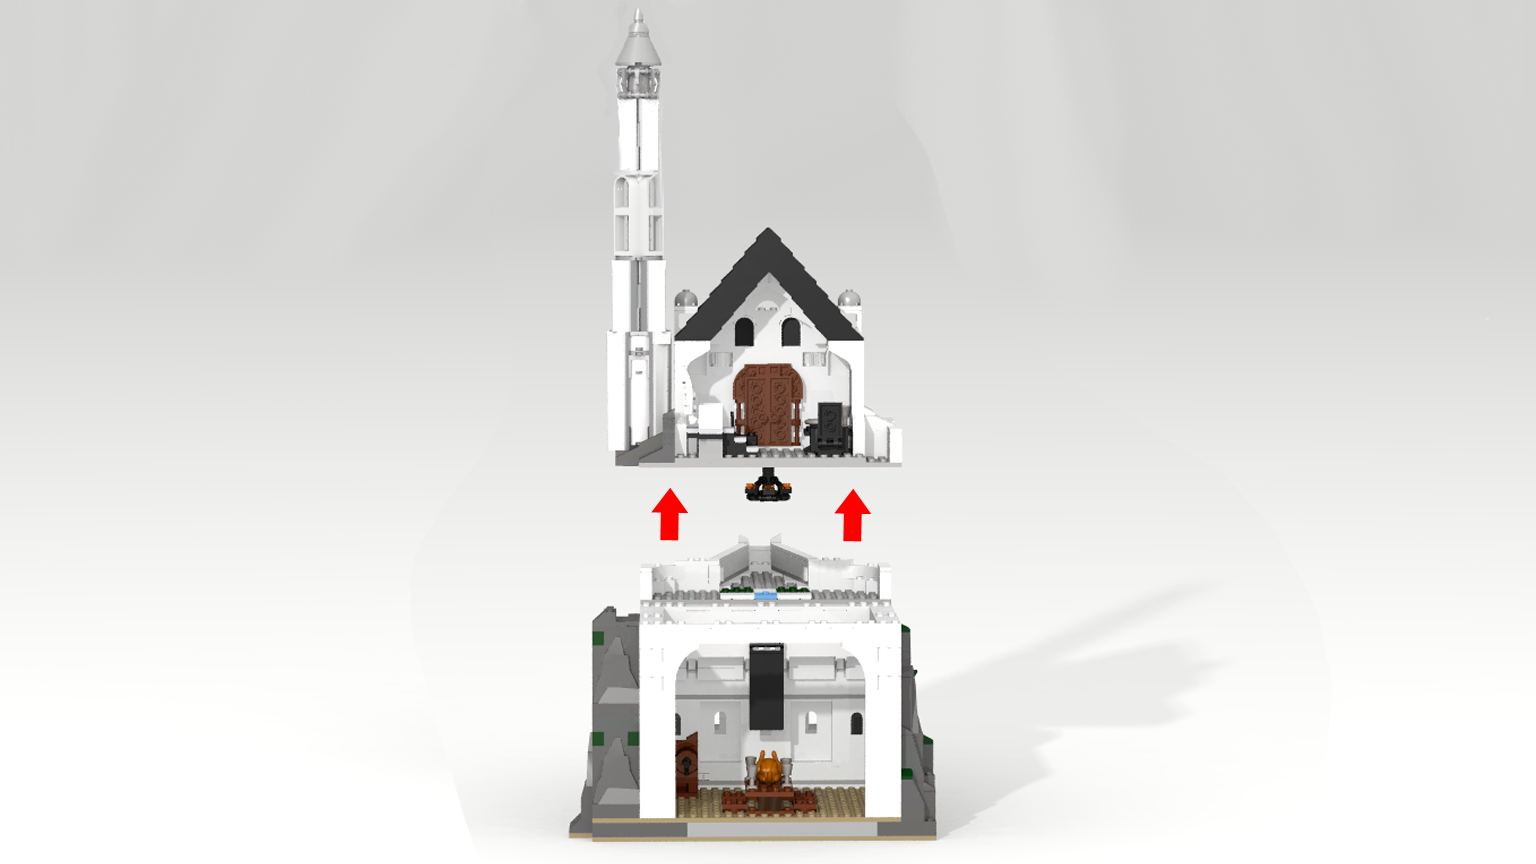 Brickvention 2018: Massive LEGO Minas Tirith 